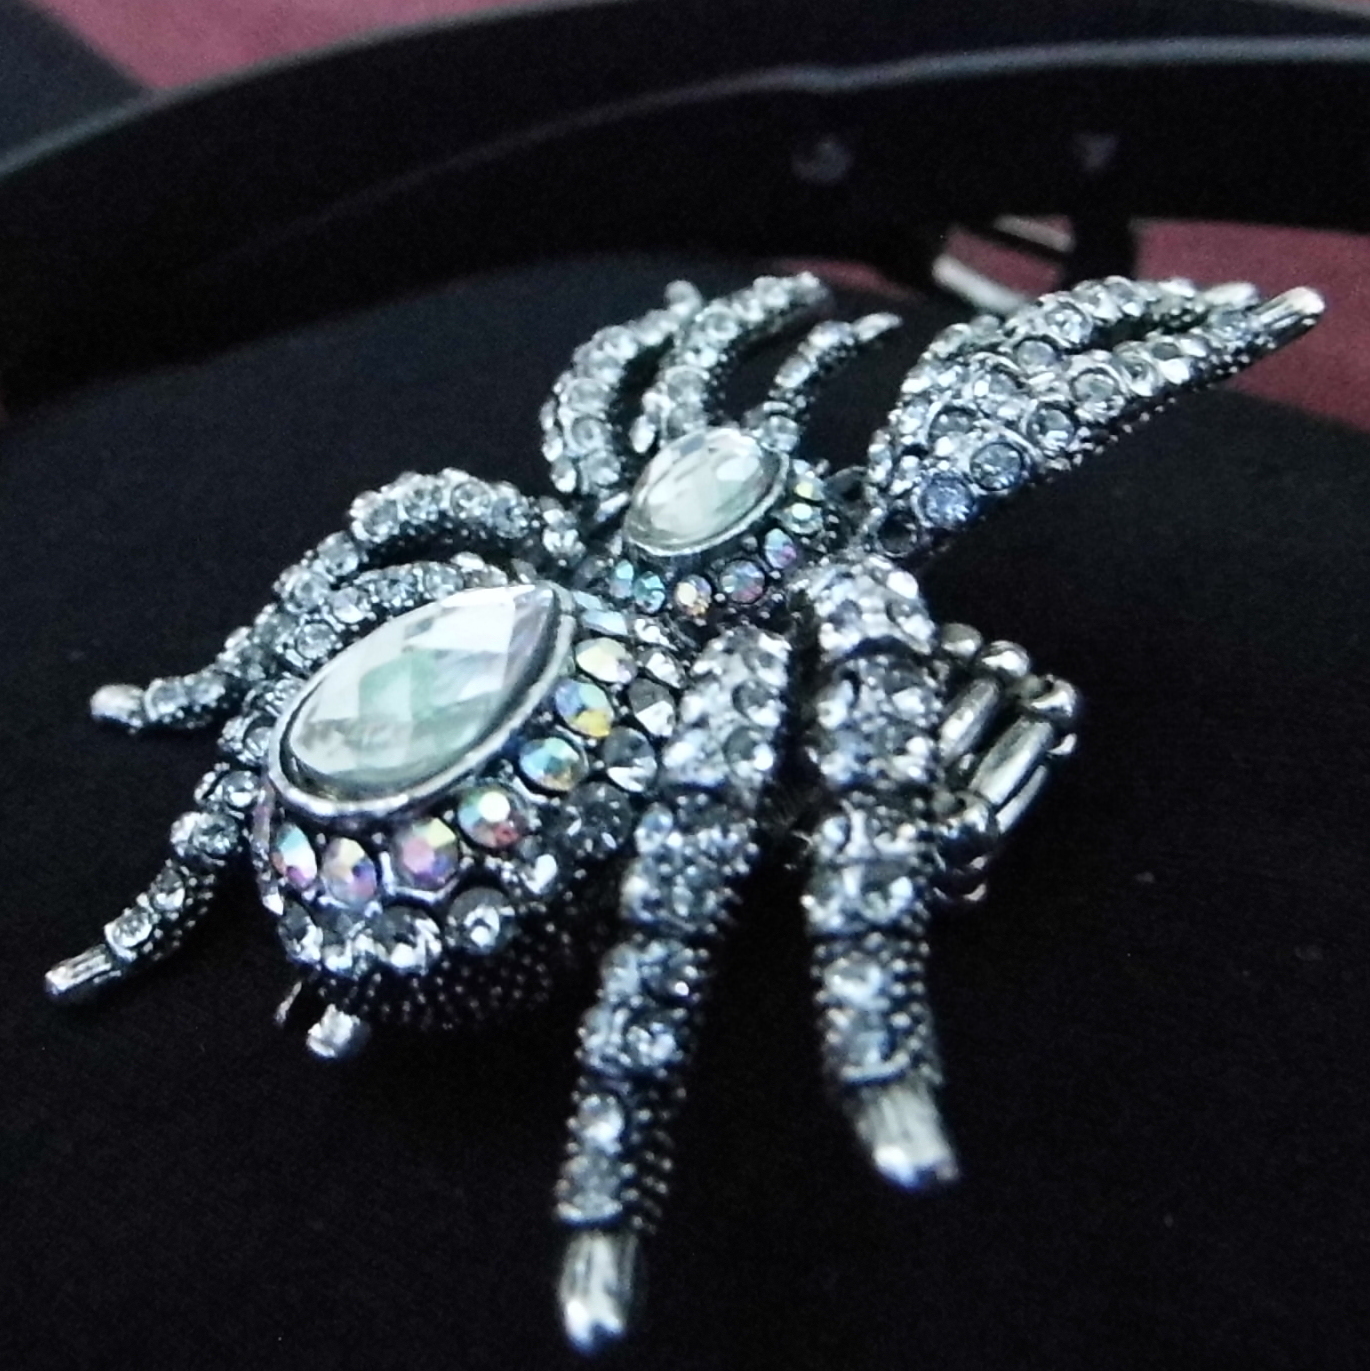 Spider Jewel Ring